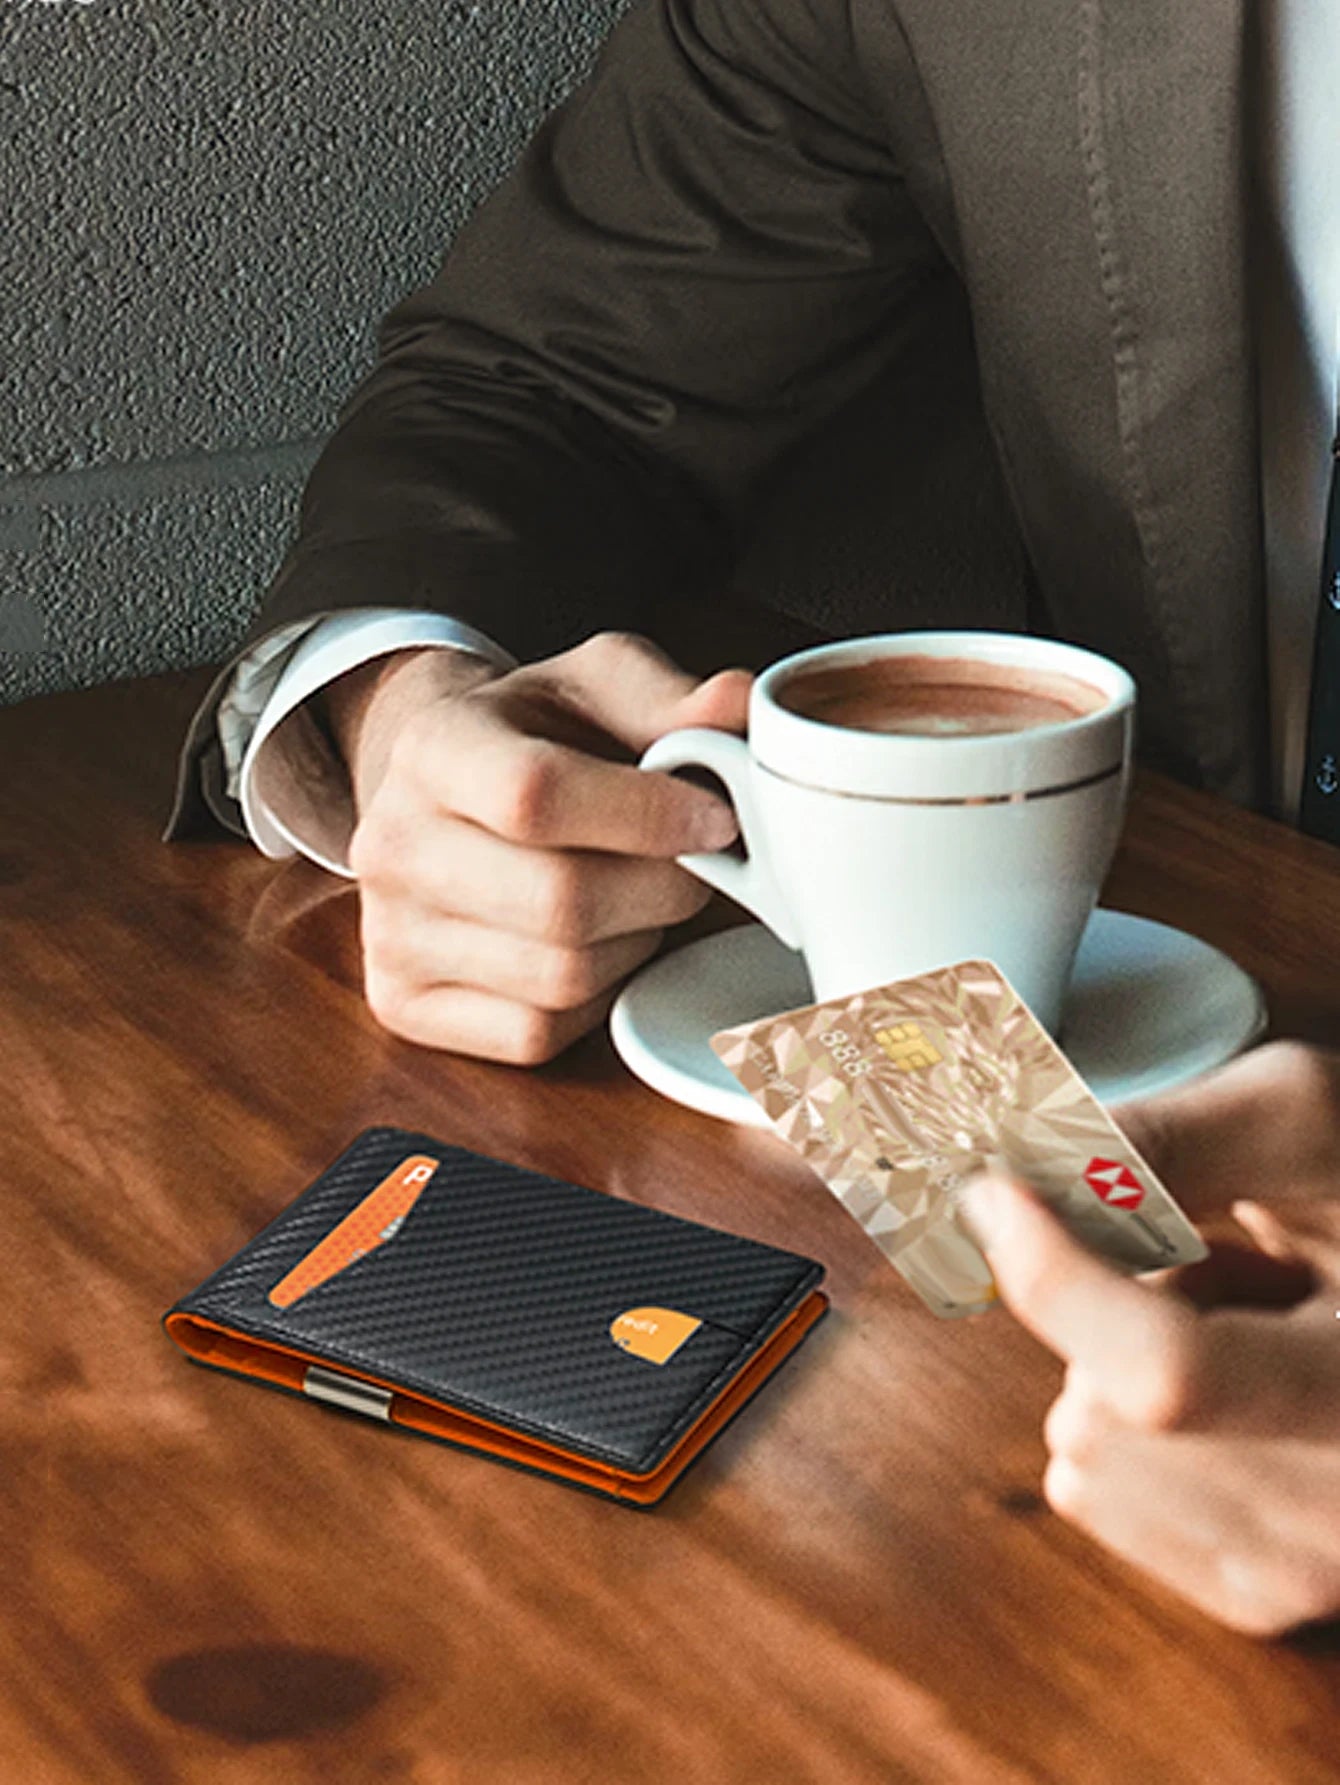 Minimalist men's RFID blocking multi-functional ultra-thin 12-card wallet, front pocket bi-fold solid color portable card holder